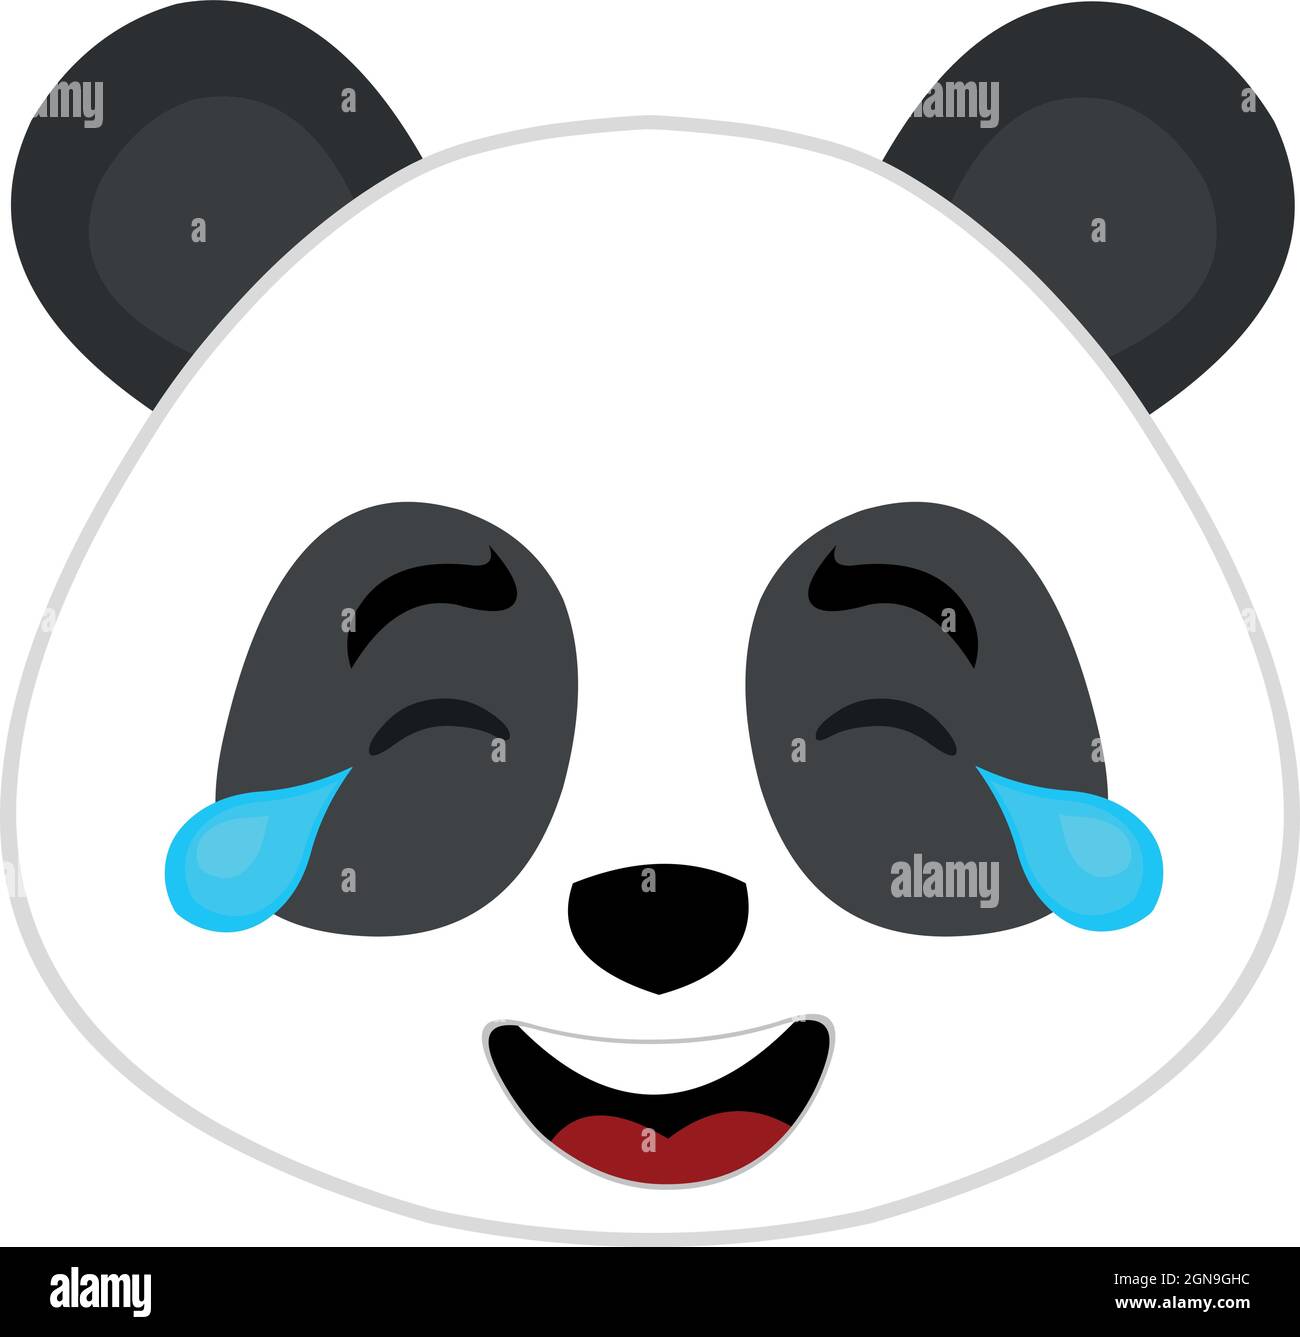 Vector emoticon illustration of the face of a cartoon panda bear with tears of joy Stock Vector